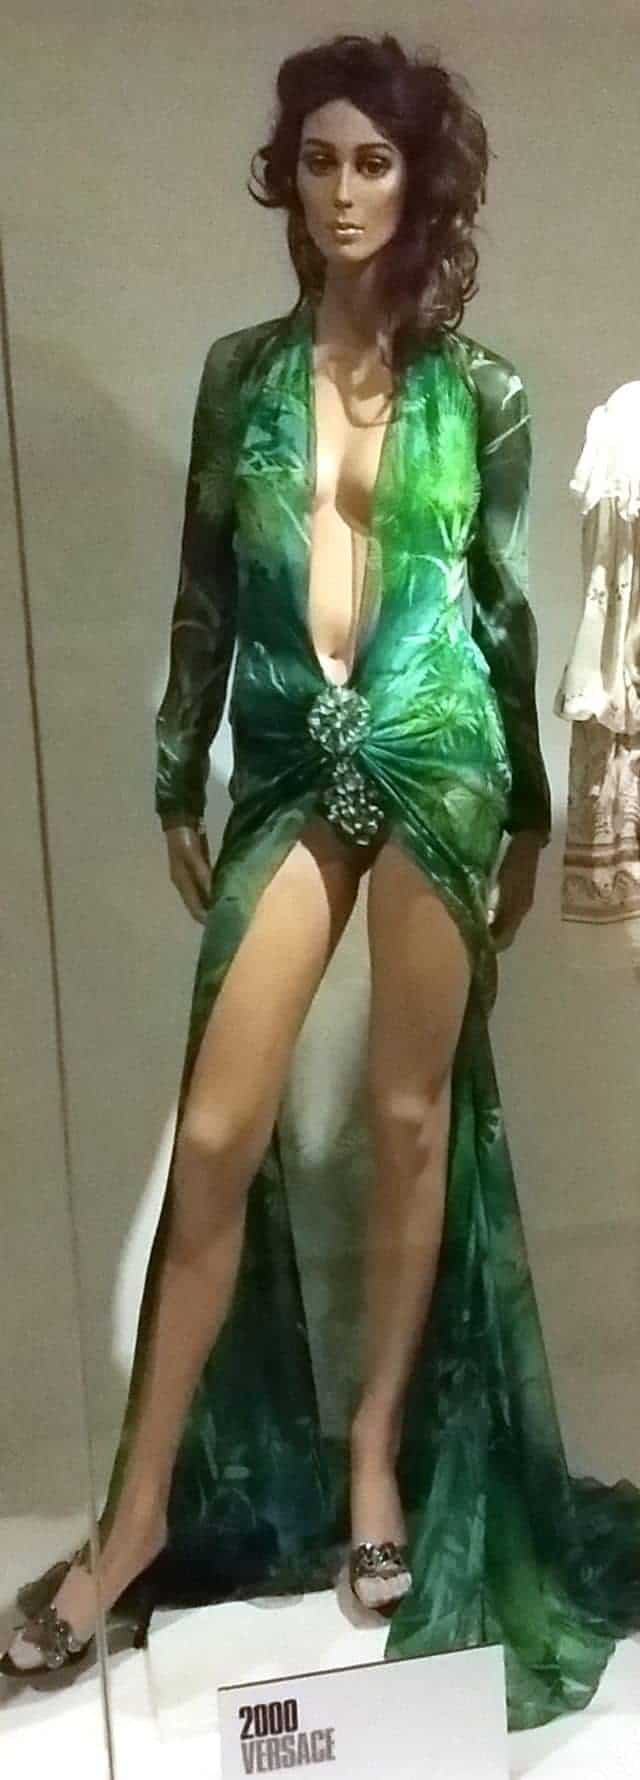 जेनिफर लोपेज की ग्रीन वर्साचे ड्रेस। Green Versace dress of Jennifer Lopez.